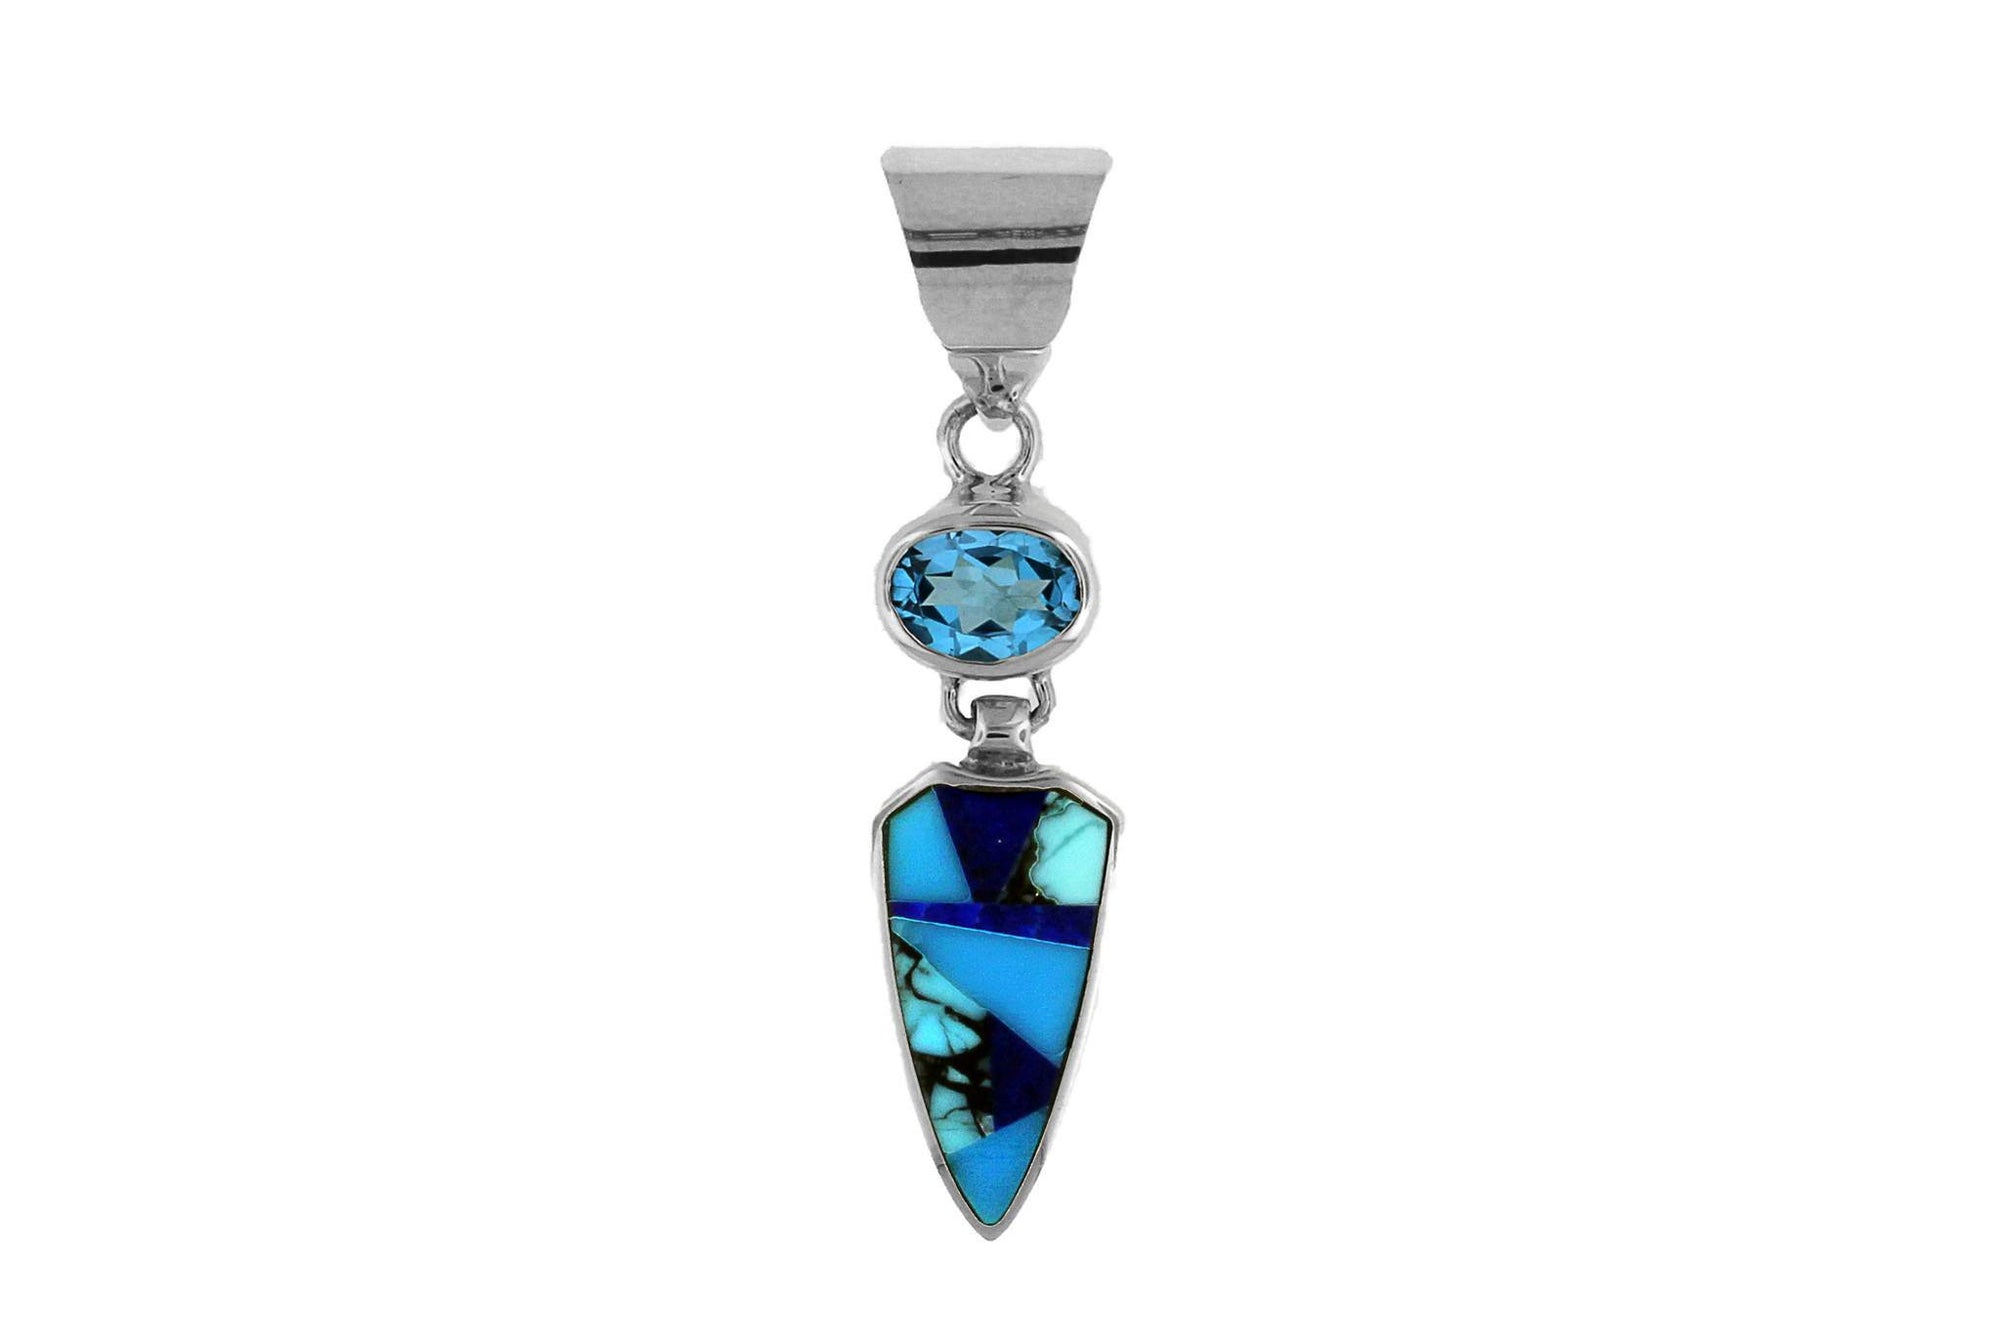 David Rosales Inlaid Pendant - Native American Turquoise Jewelry